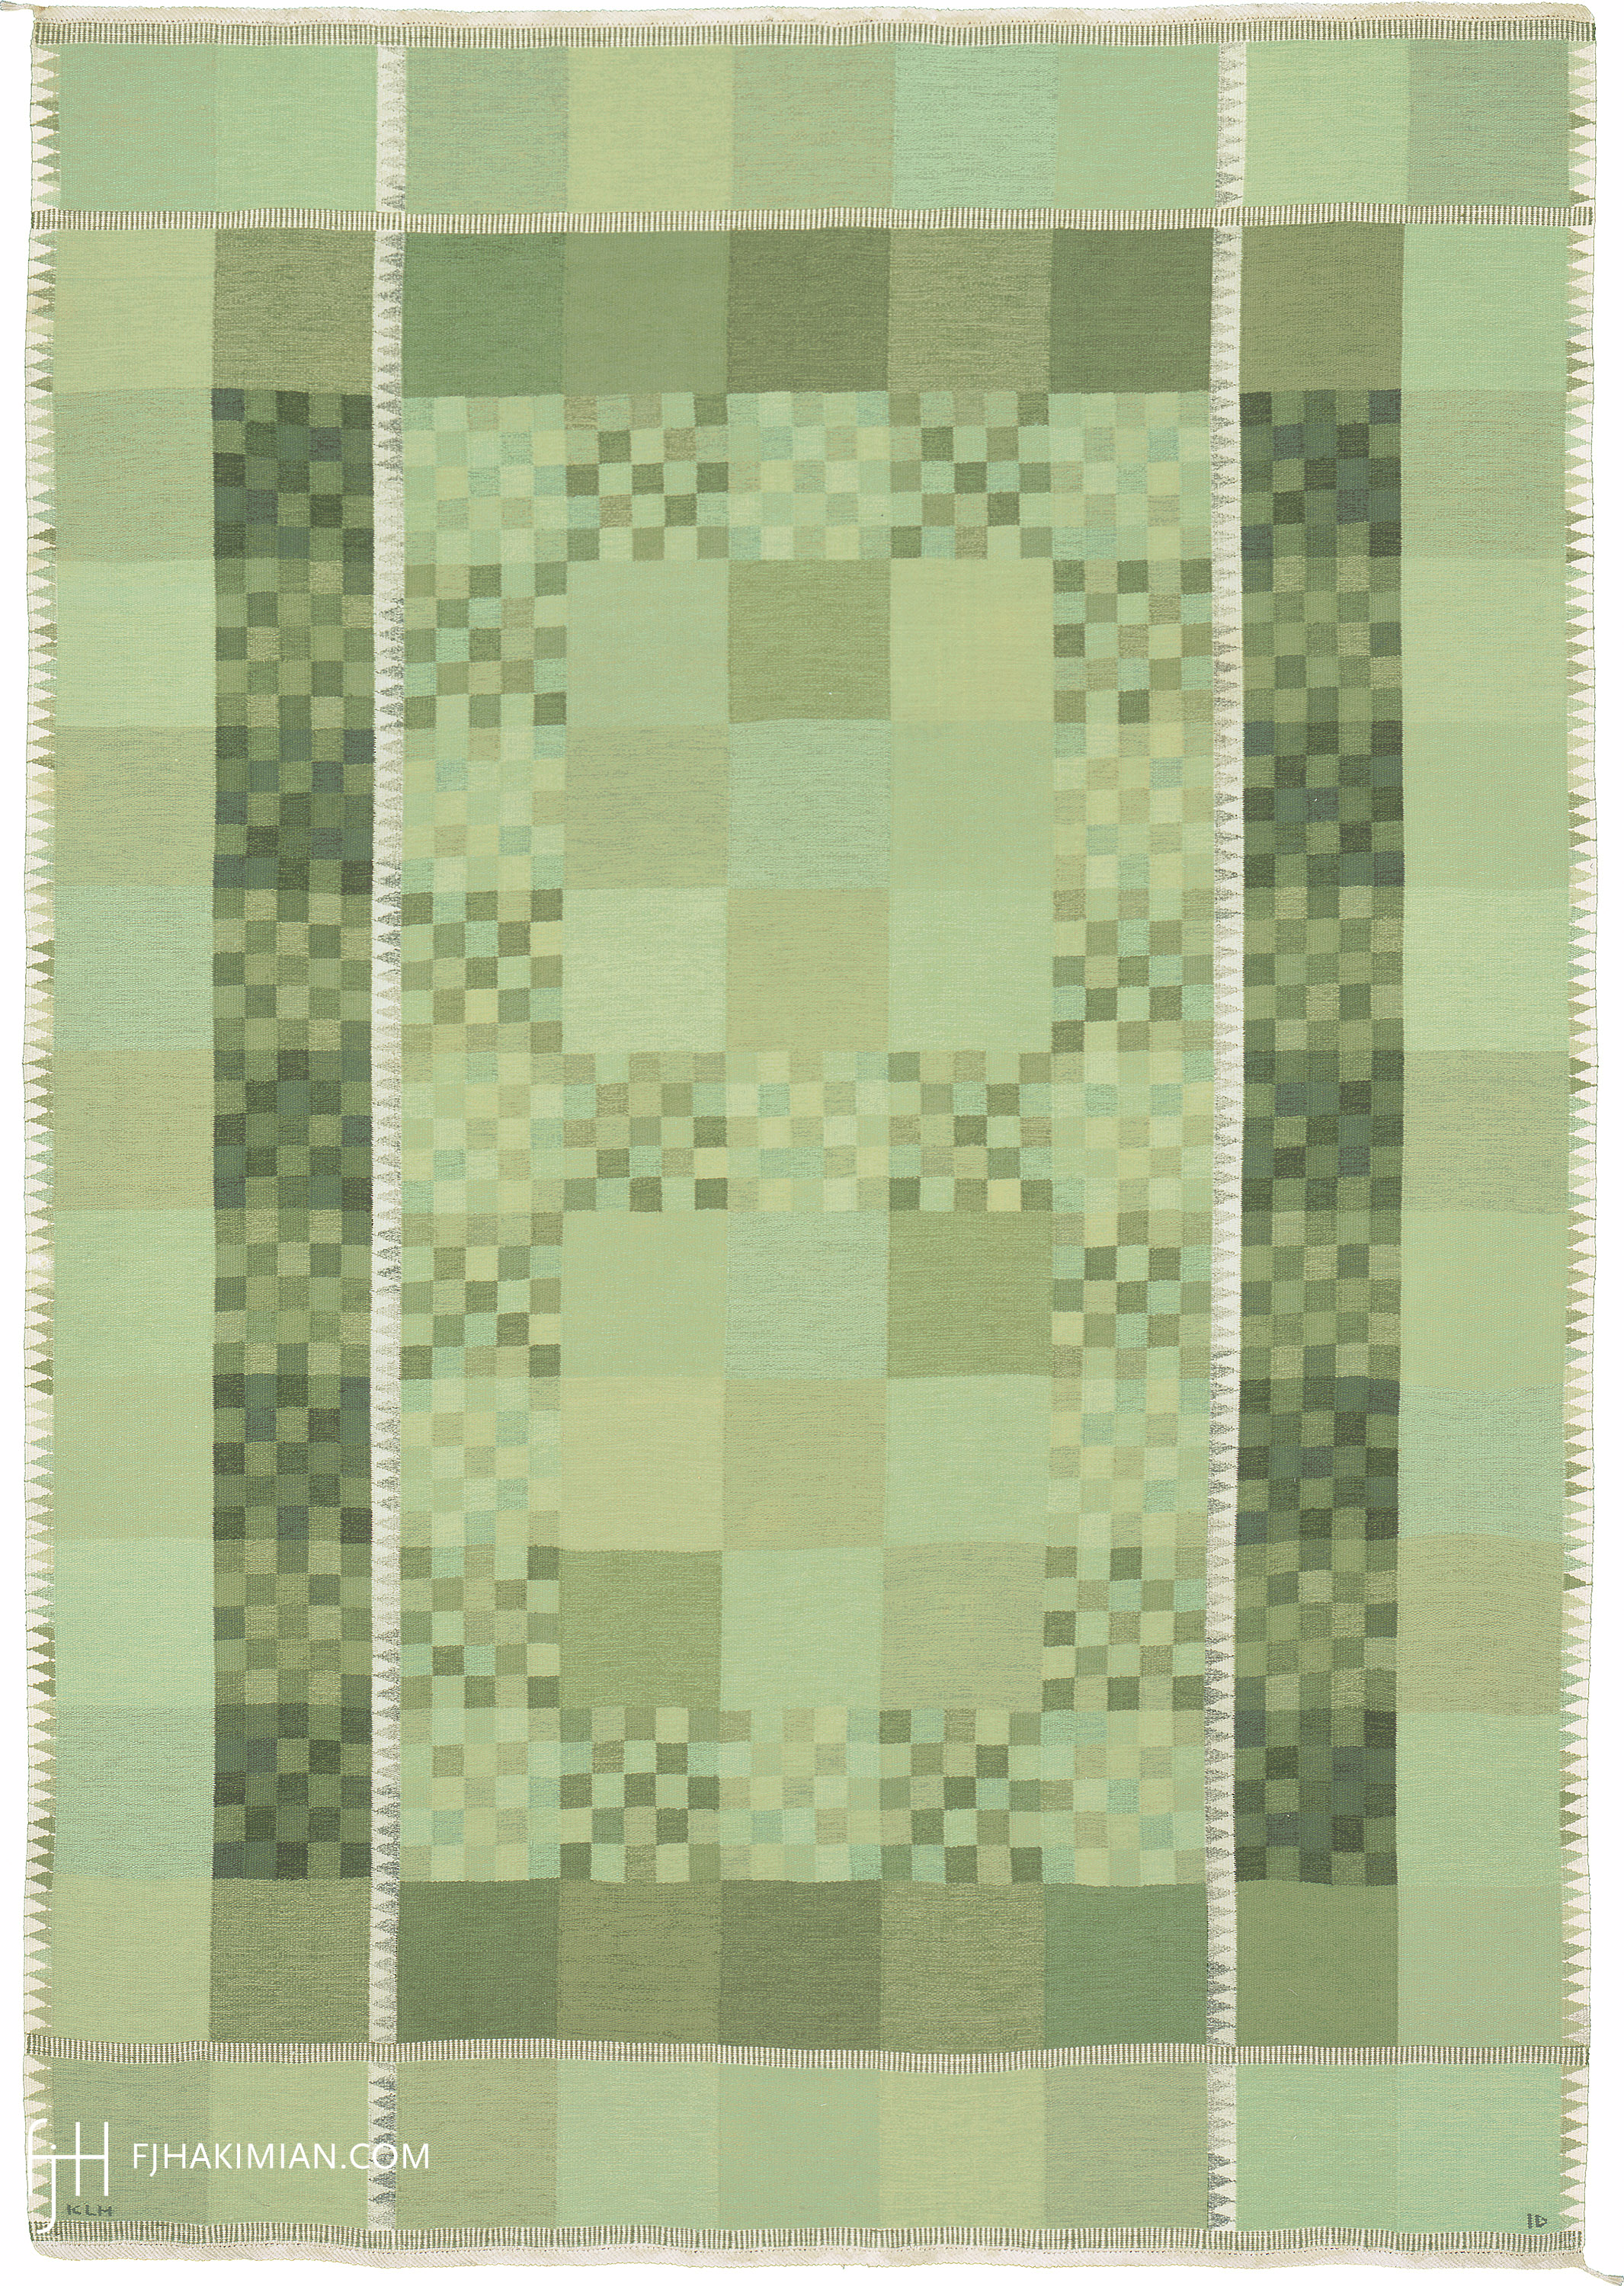 Swedish Flat Weave #02926 | FJ Hakimian